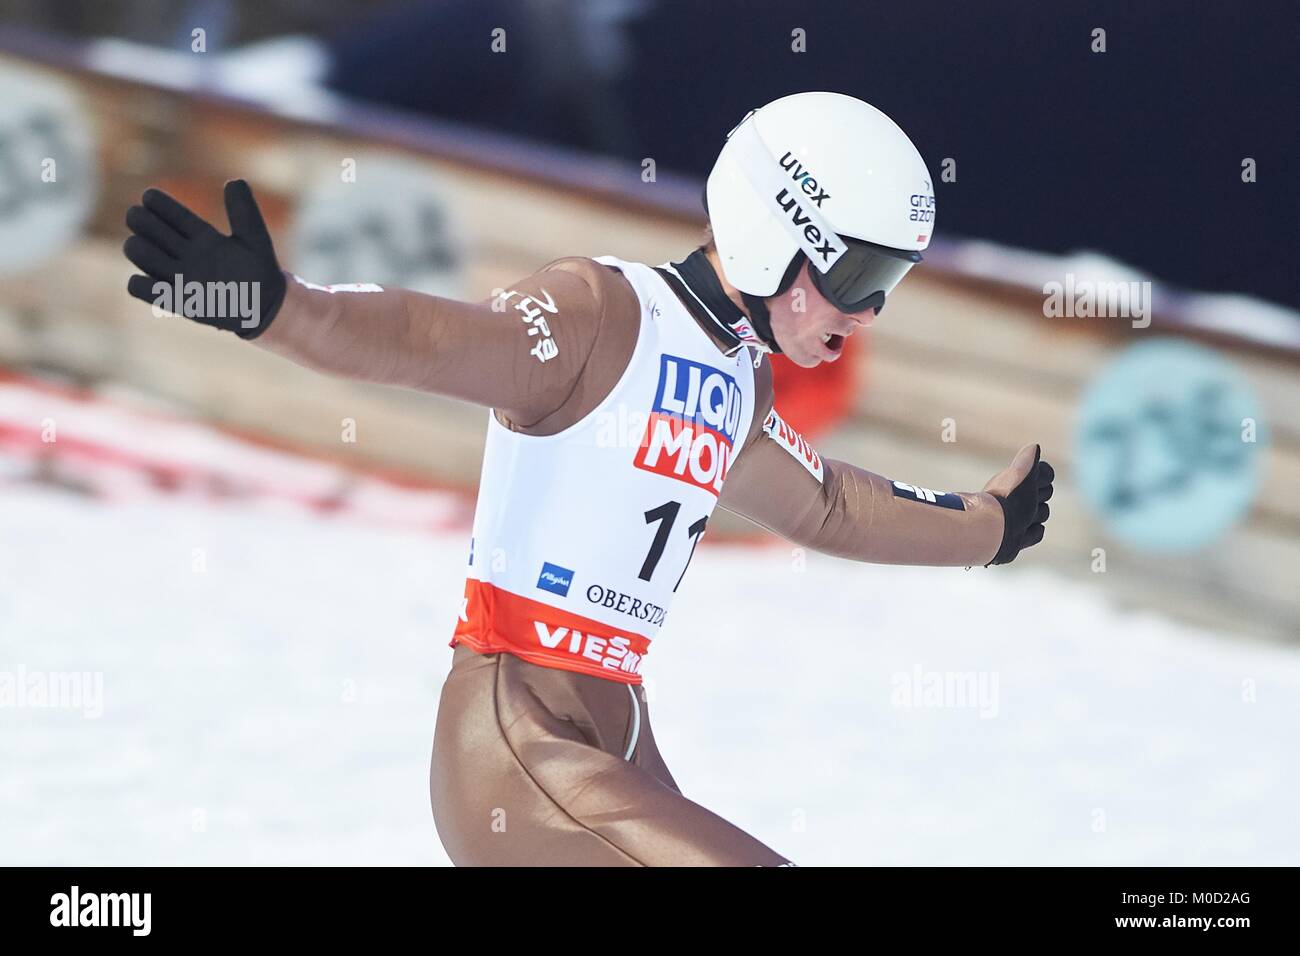 Oberstdorf, Germany. 20th Jan, 2018. FIS Ski Flying World Championships 2018 on January 20, 2018 in Oberstdorf, Germany. In the picture: Piotr Zyla Credit: East News sp. z o.o./Alamy Live News Stock Photo